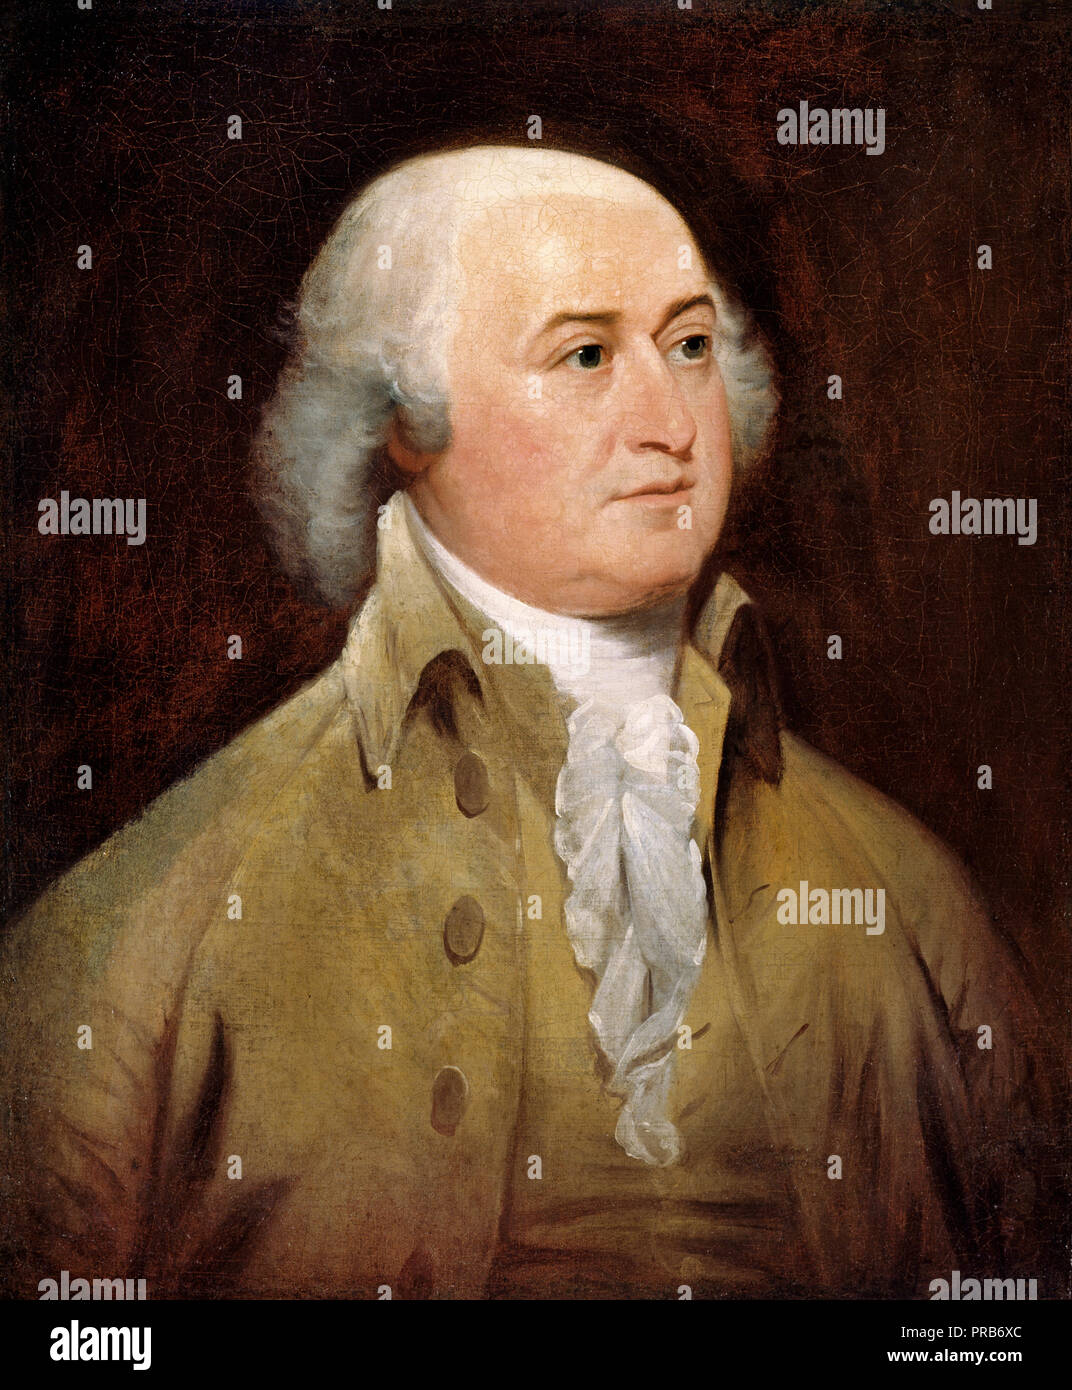 John Trumbull, John Adams 1793 Oil on canvas, National Portrait Gallery, Washington, D.C., USA. Stock Photo